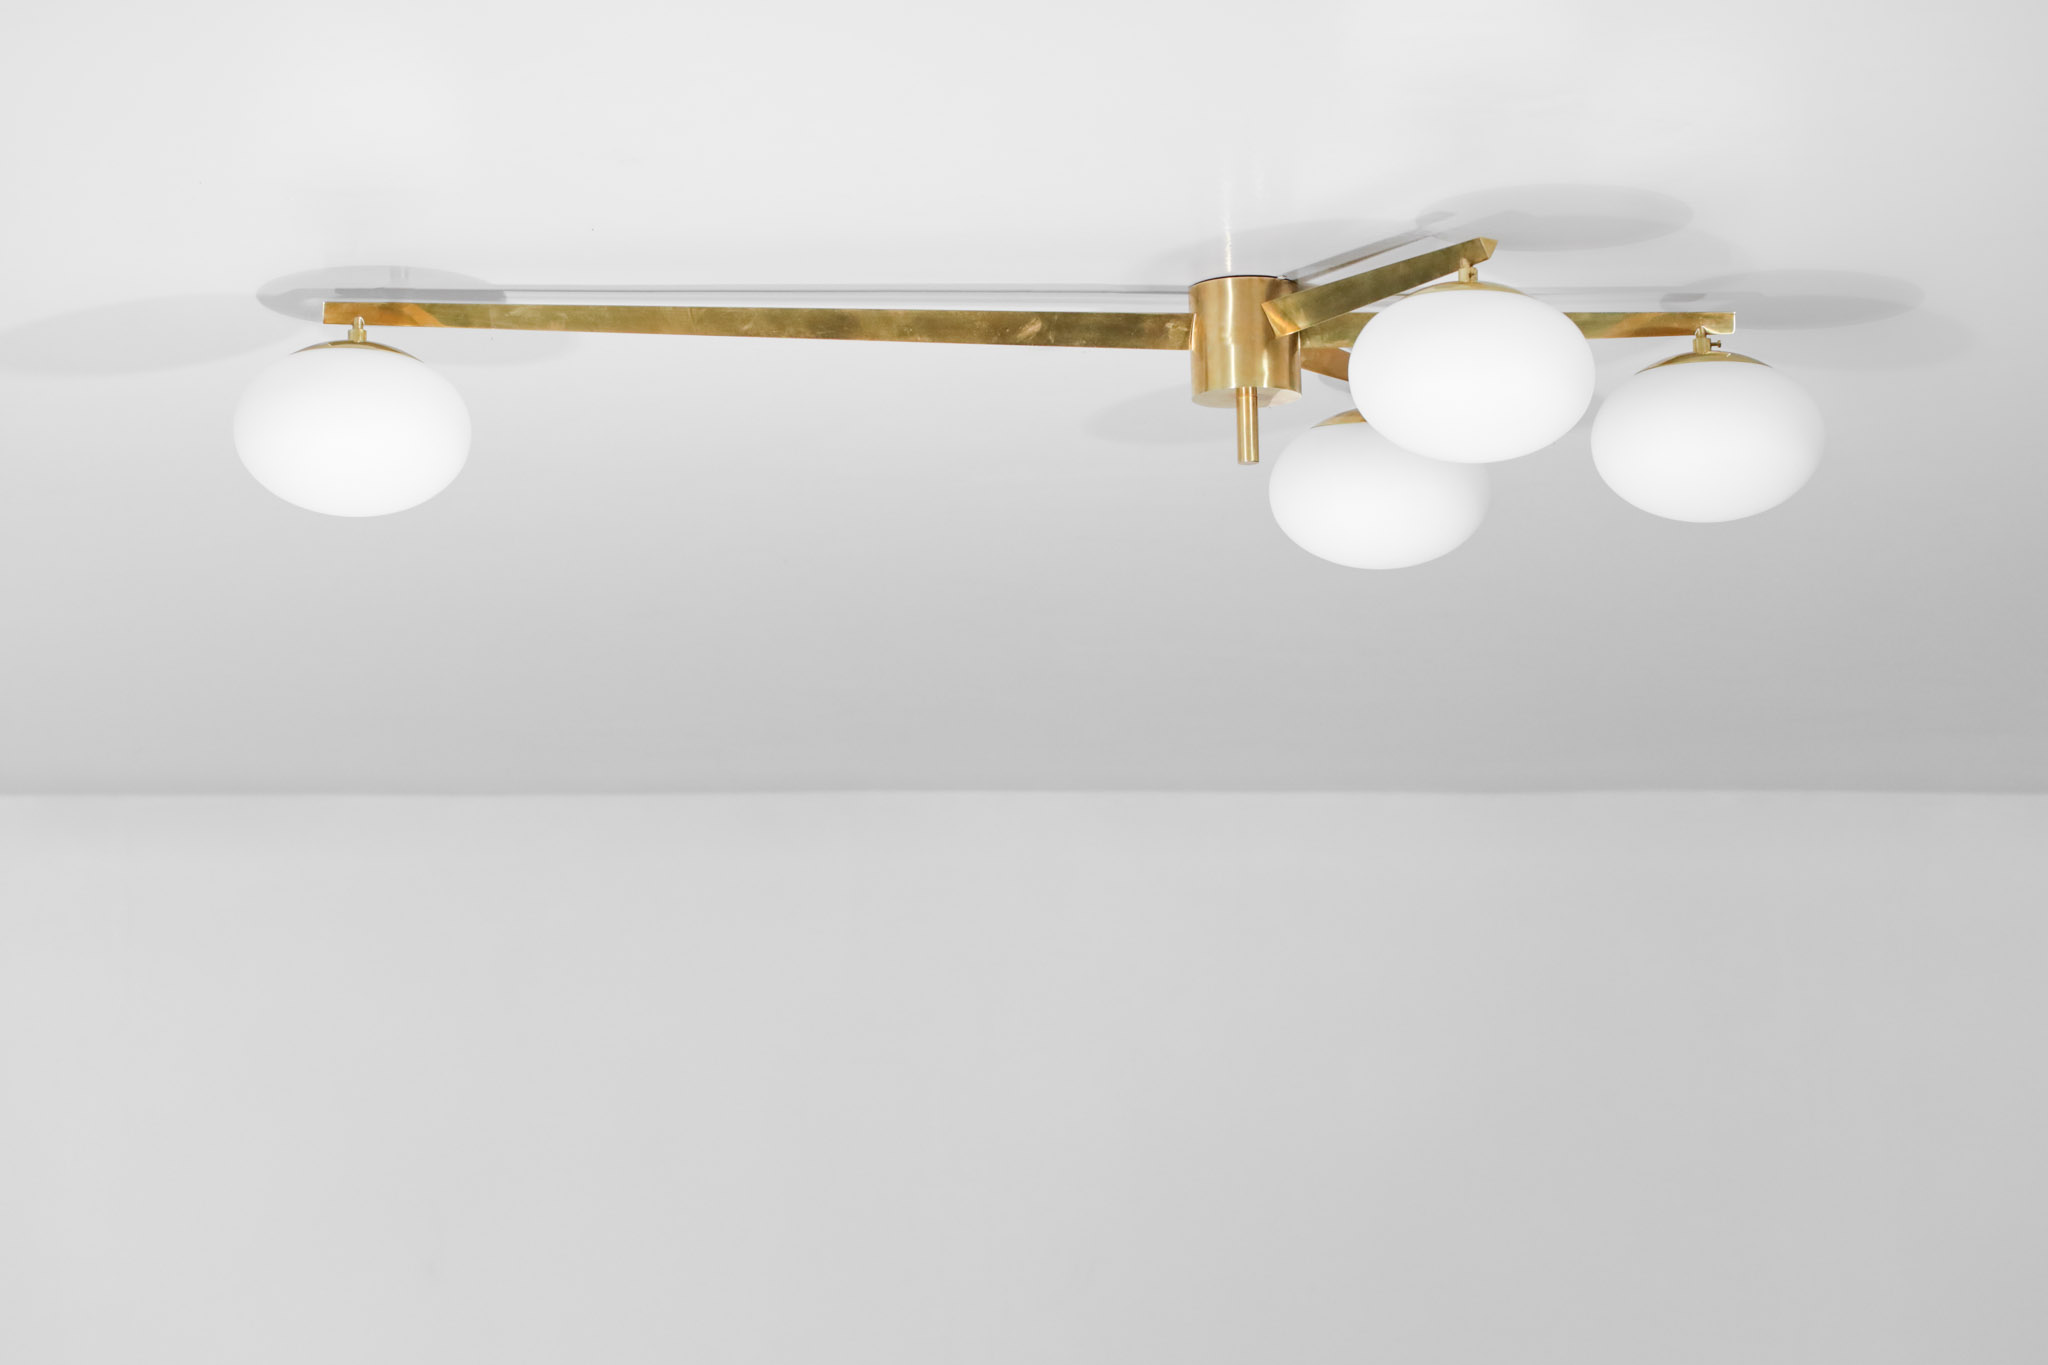 focus Productie Tactiel gevoel ceiling lamp 4 opalines style angelo lelli italian design “Mila” – GU106 –  Danke Galerie